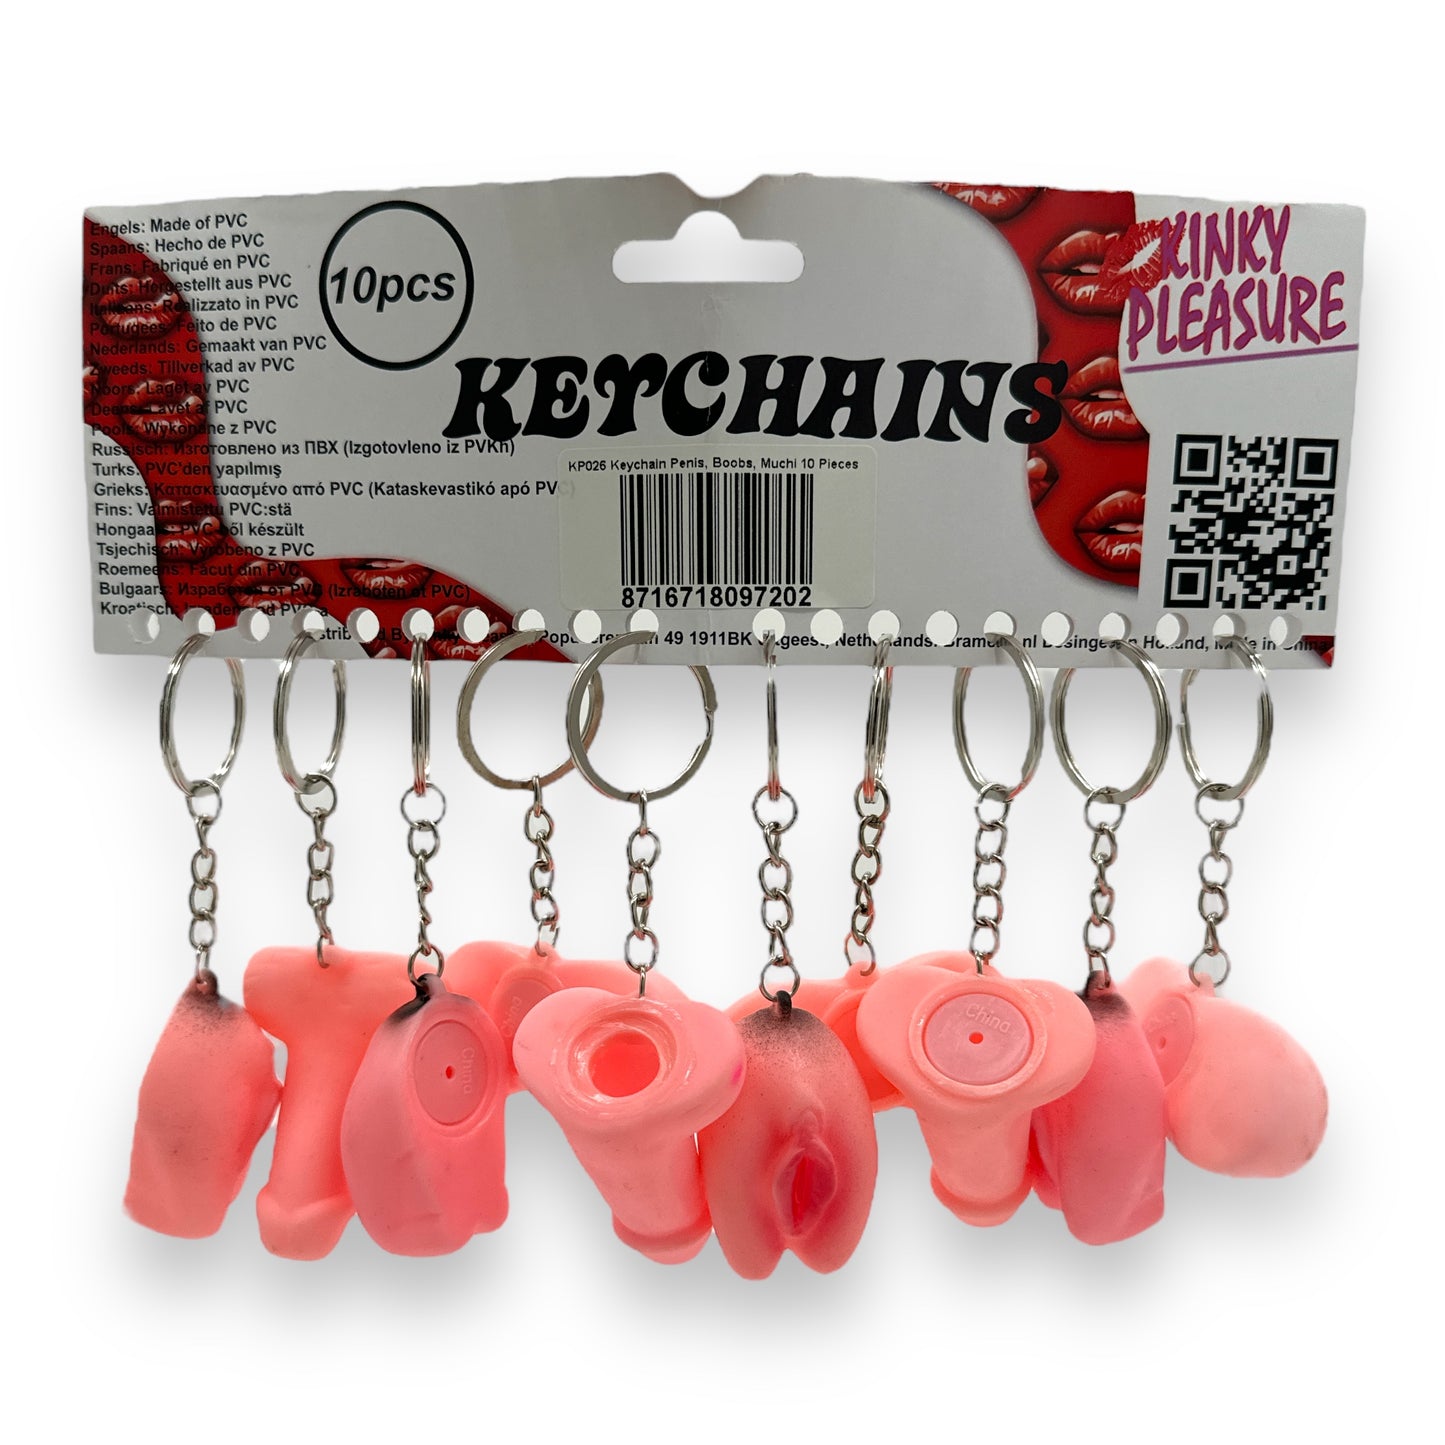 Kinky Pleasure - KP026 - Keychain Penis, Muchi, Boobs - 3 Models